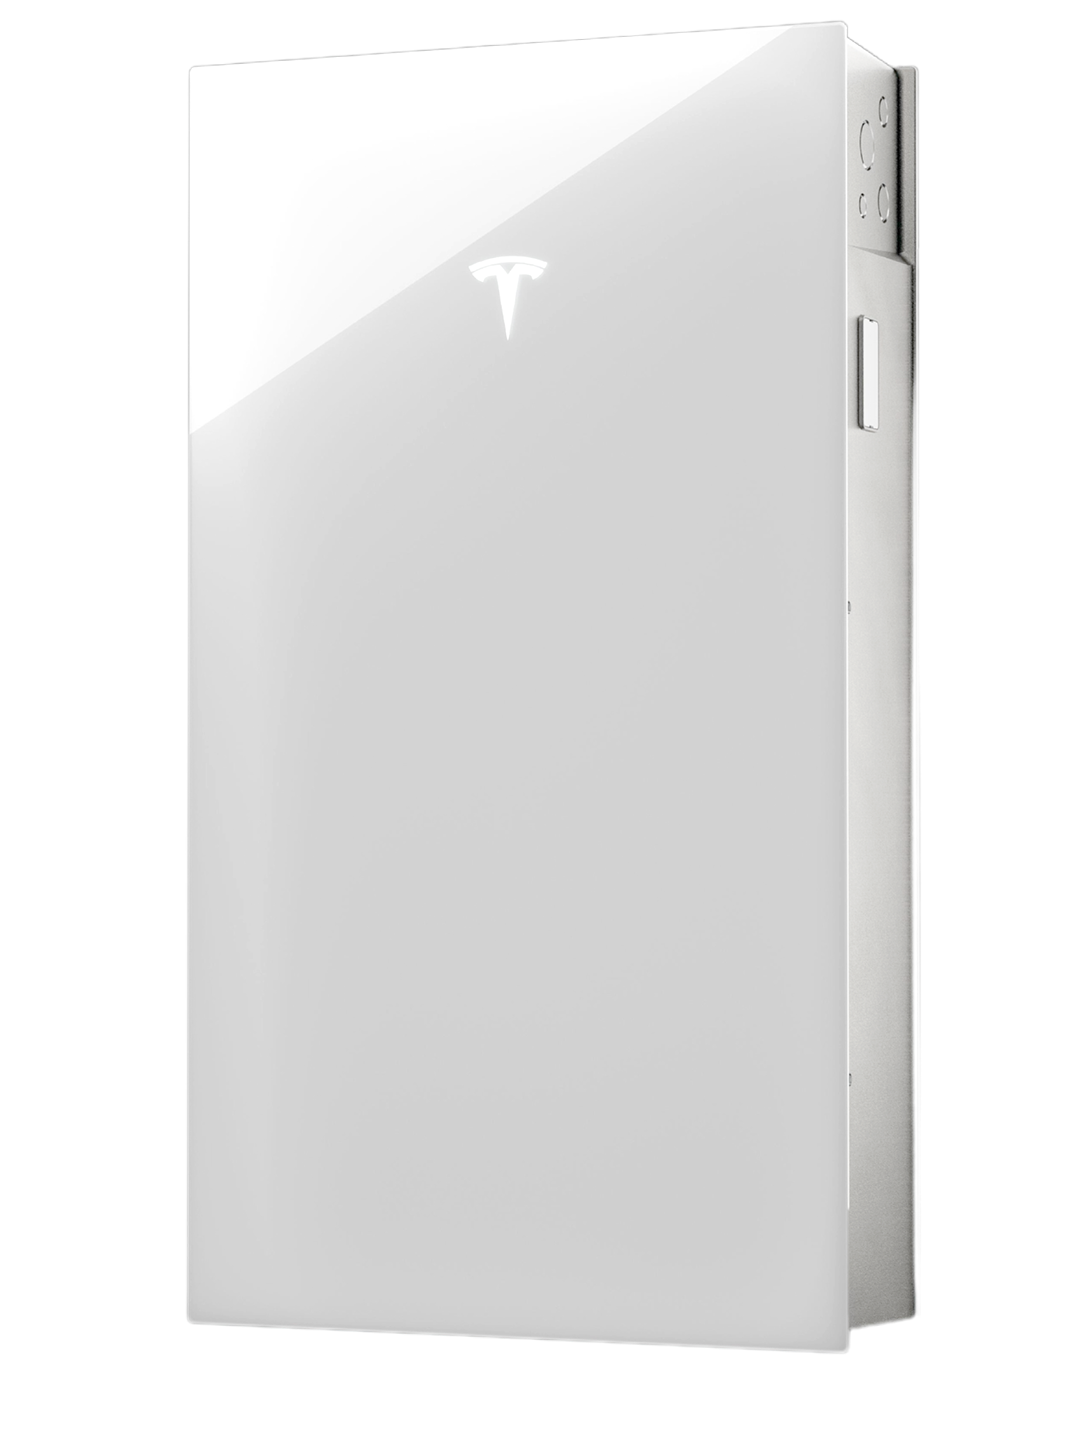 Tesla Powerwall for sale in Pittsburgh